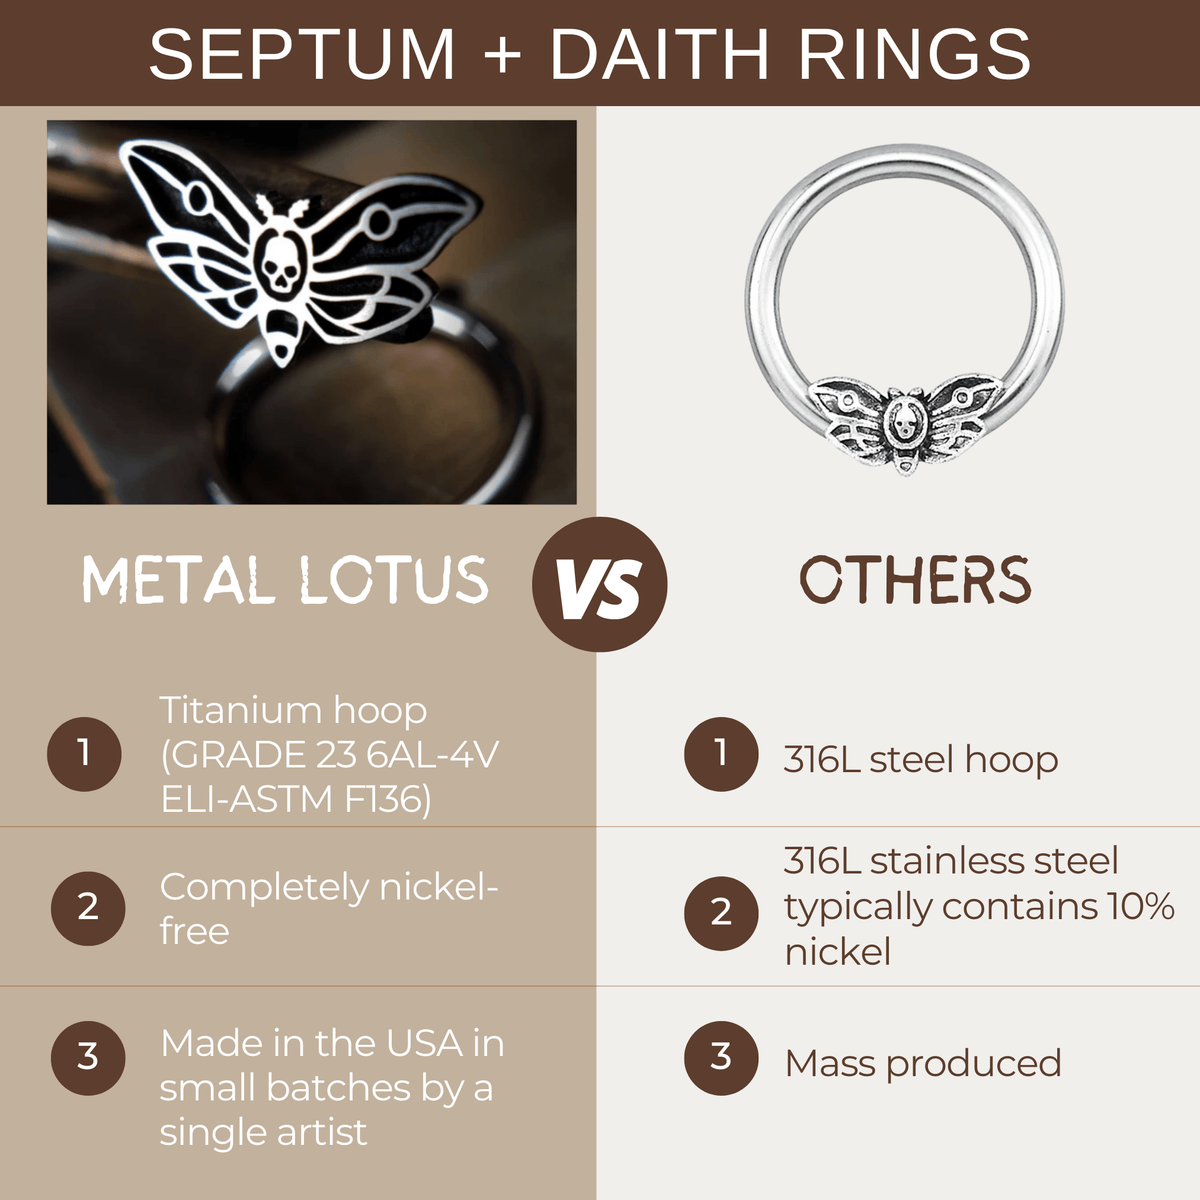 Moose Skull Septum + Daith Ring - Metal Lotus